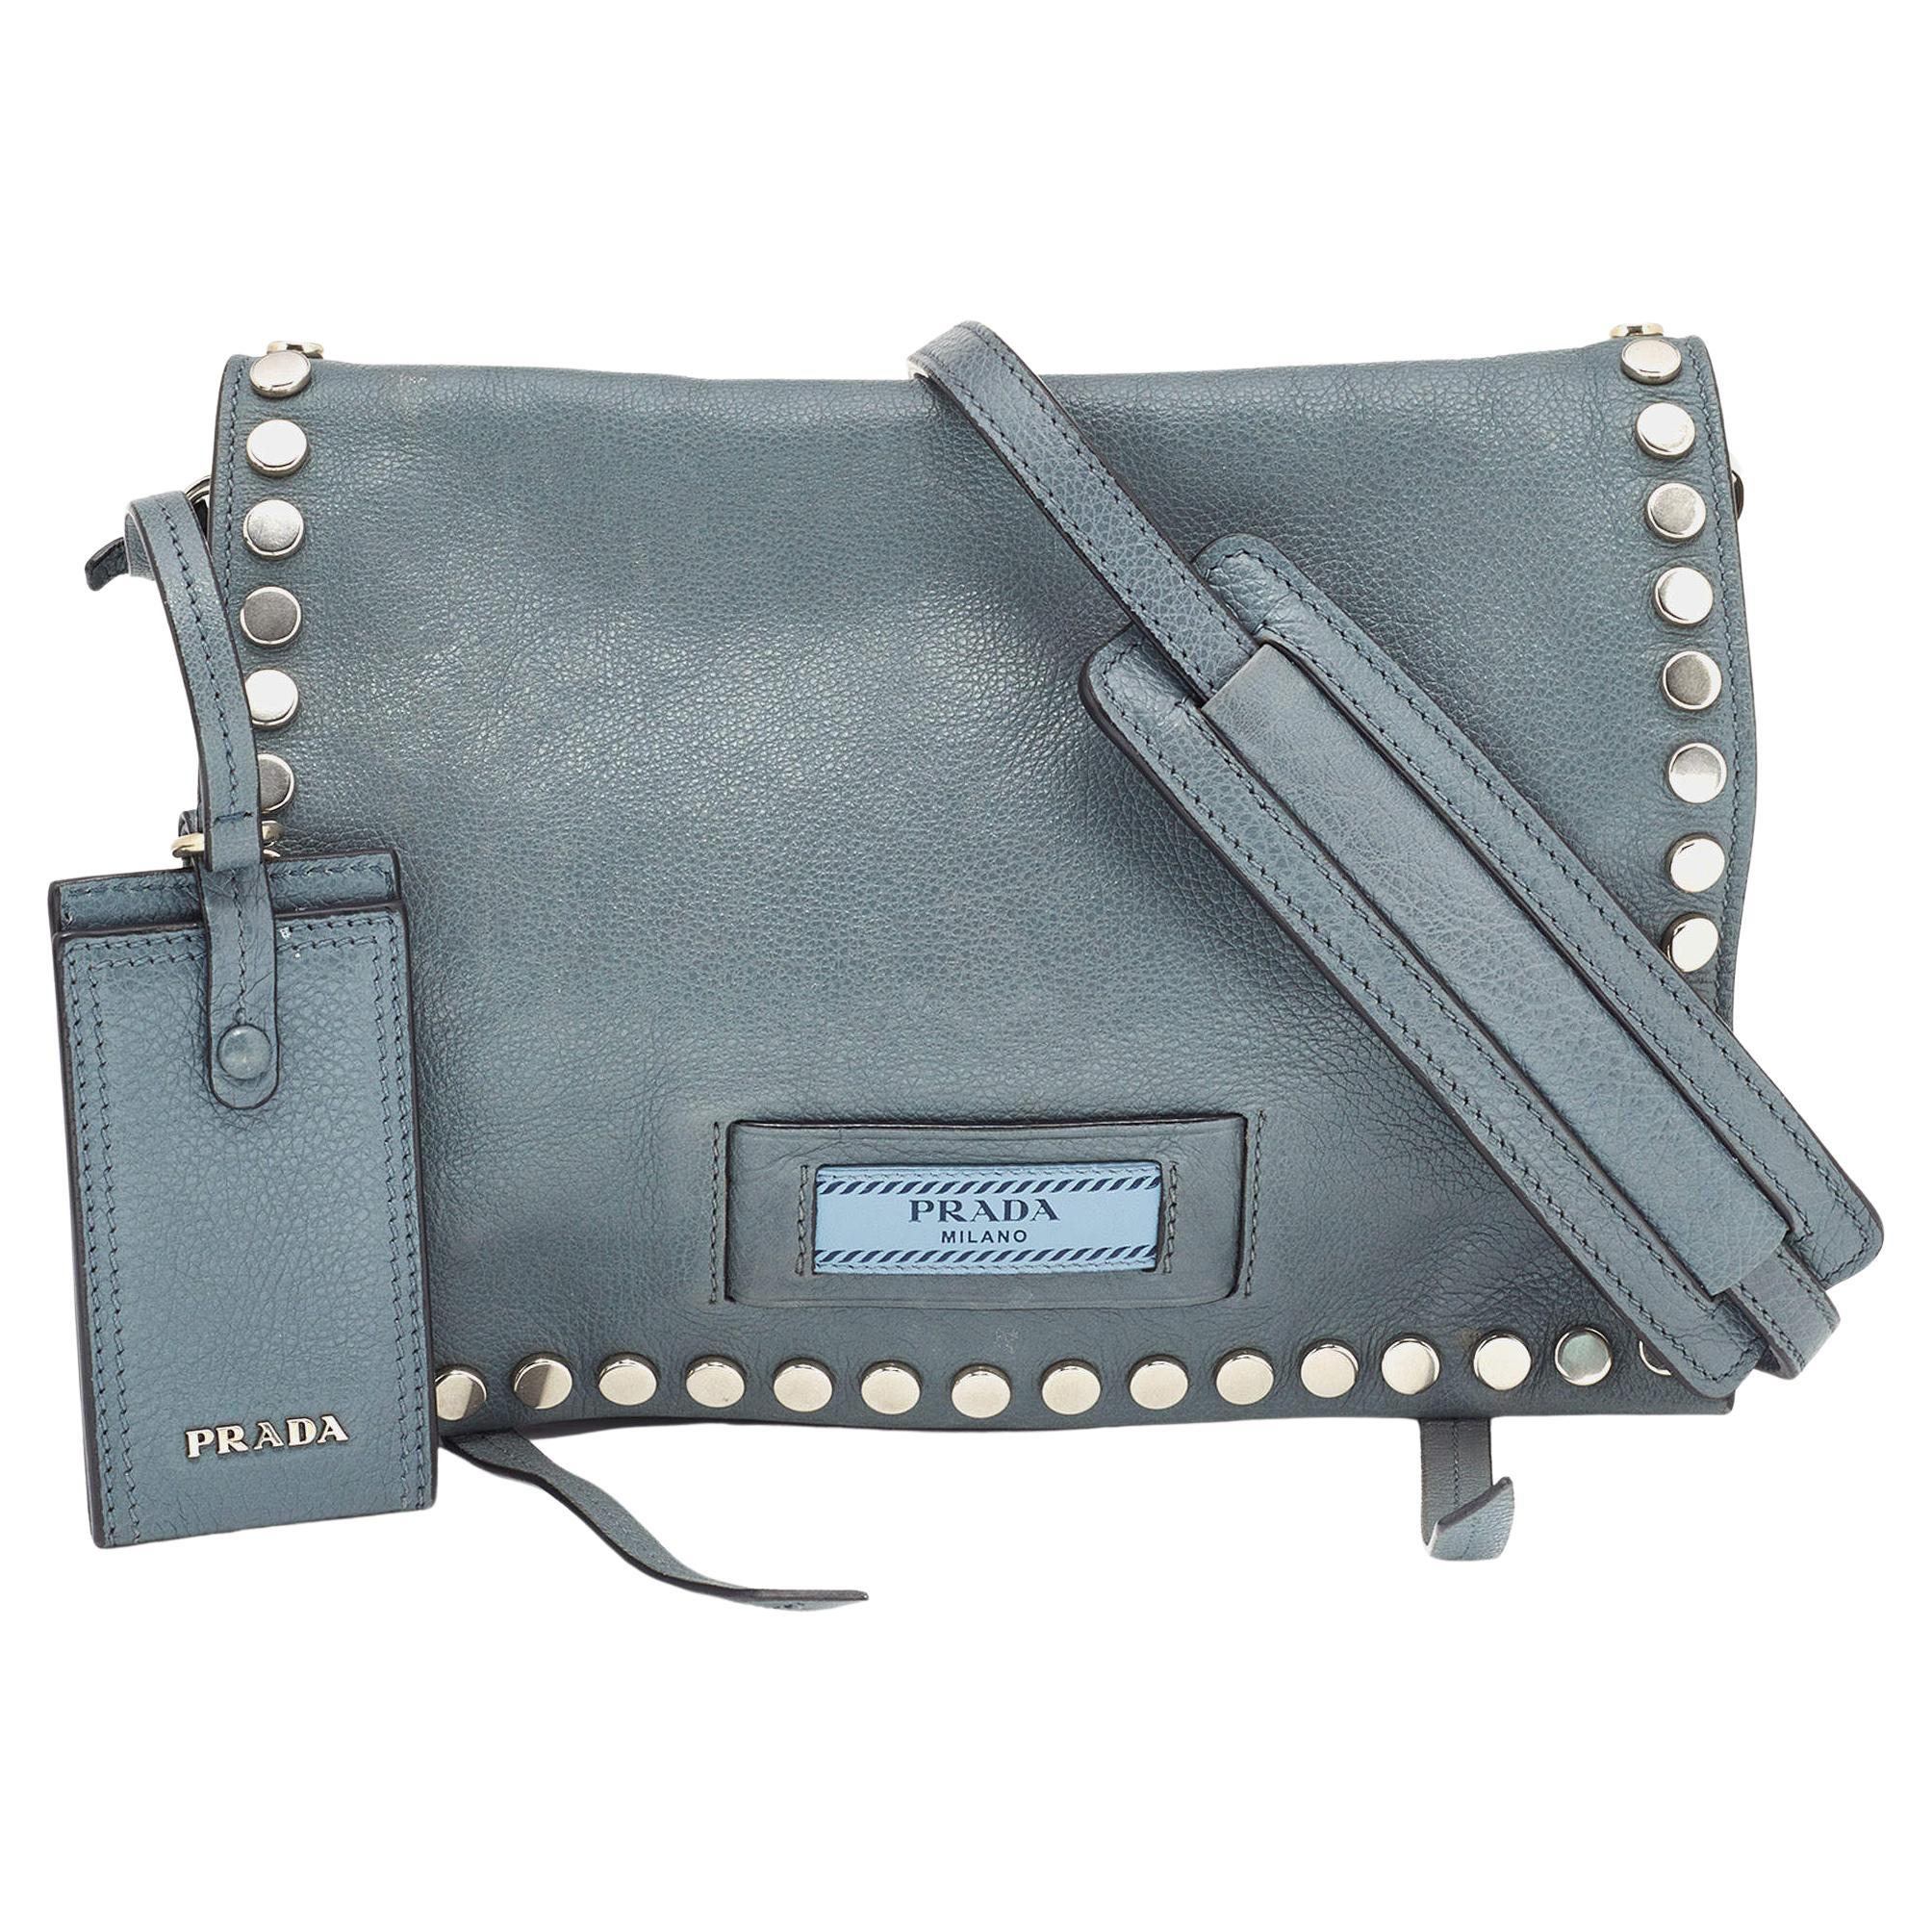 Prada Large Saffiano Leather Wallet Beige Tan Authentic $995